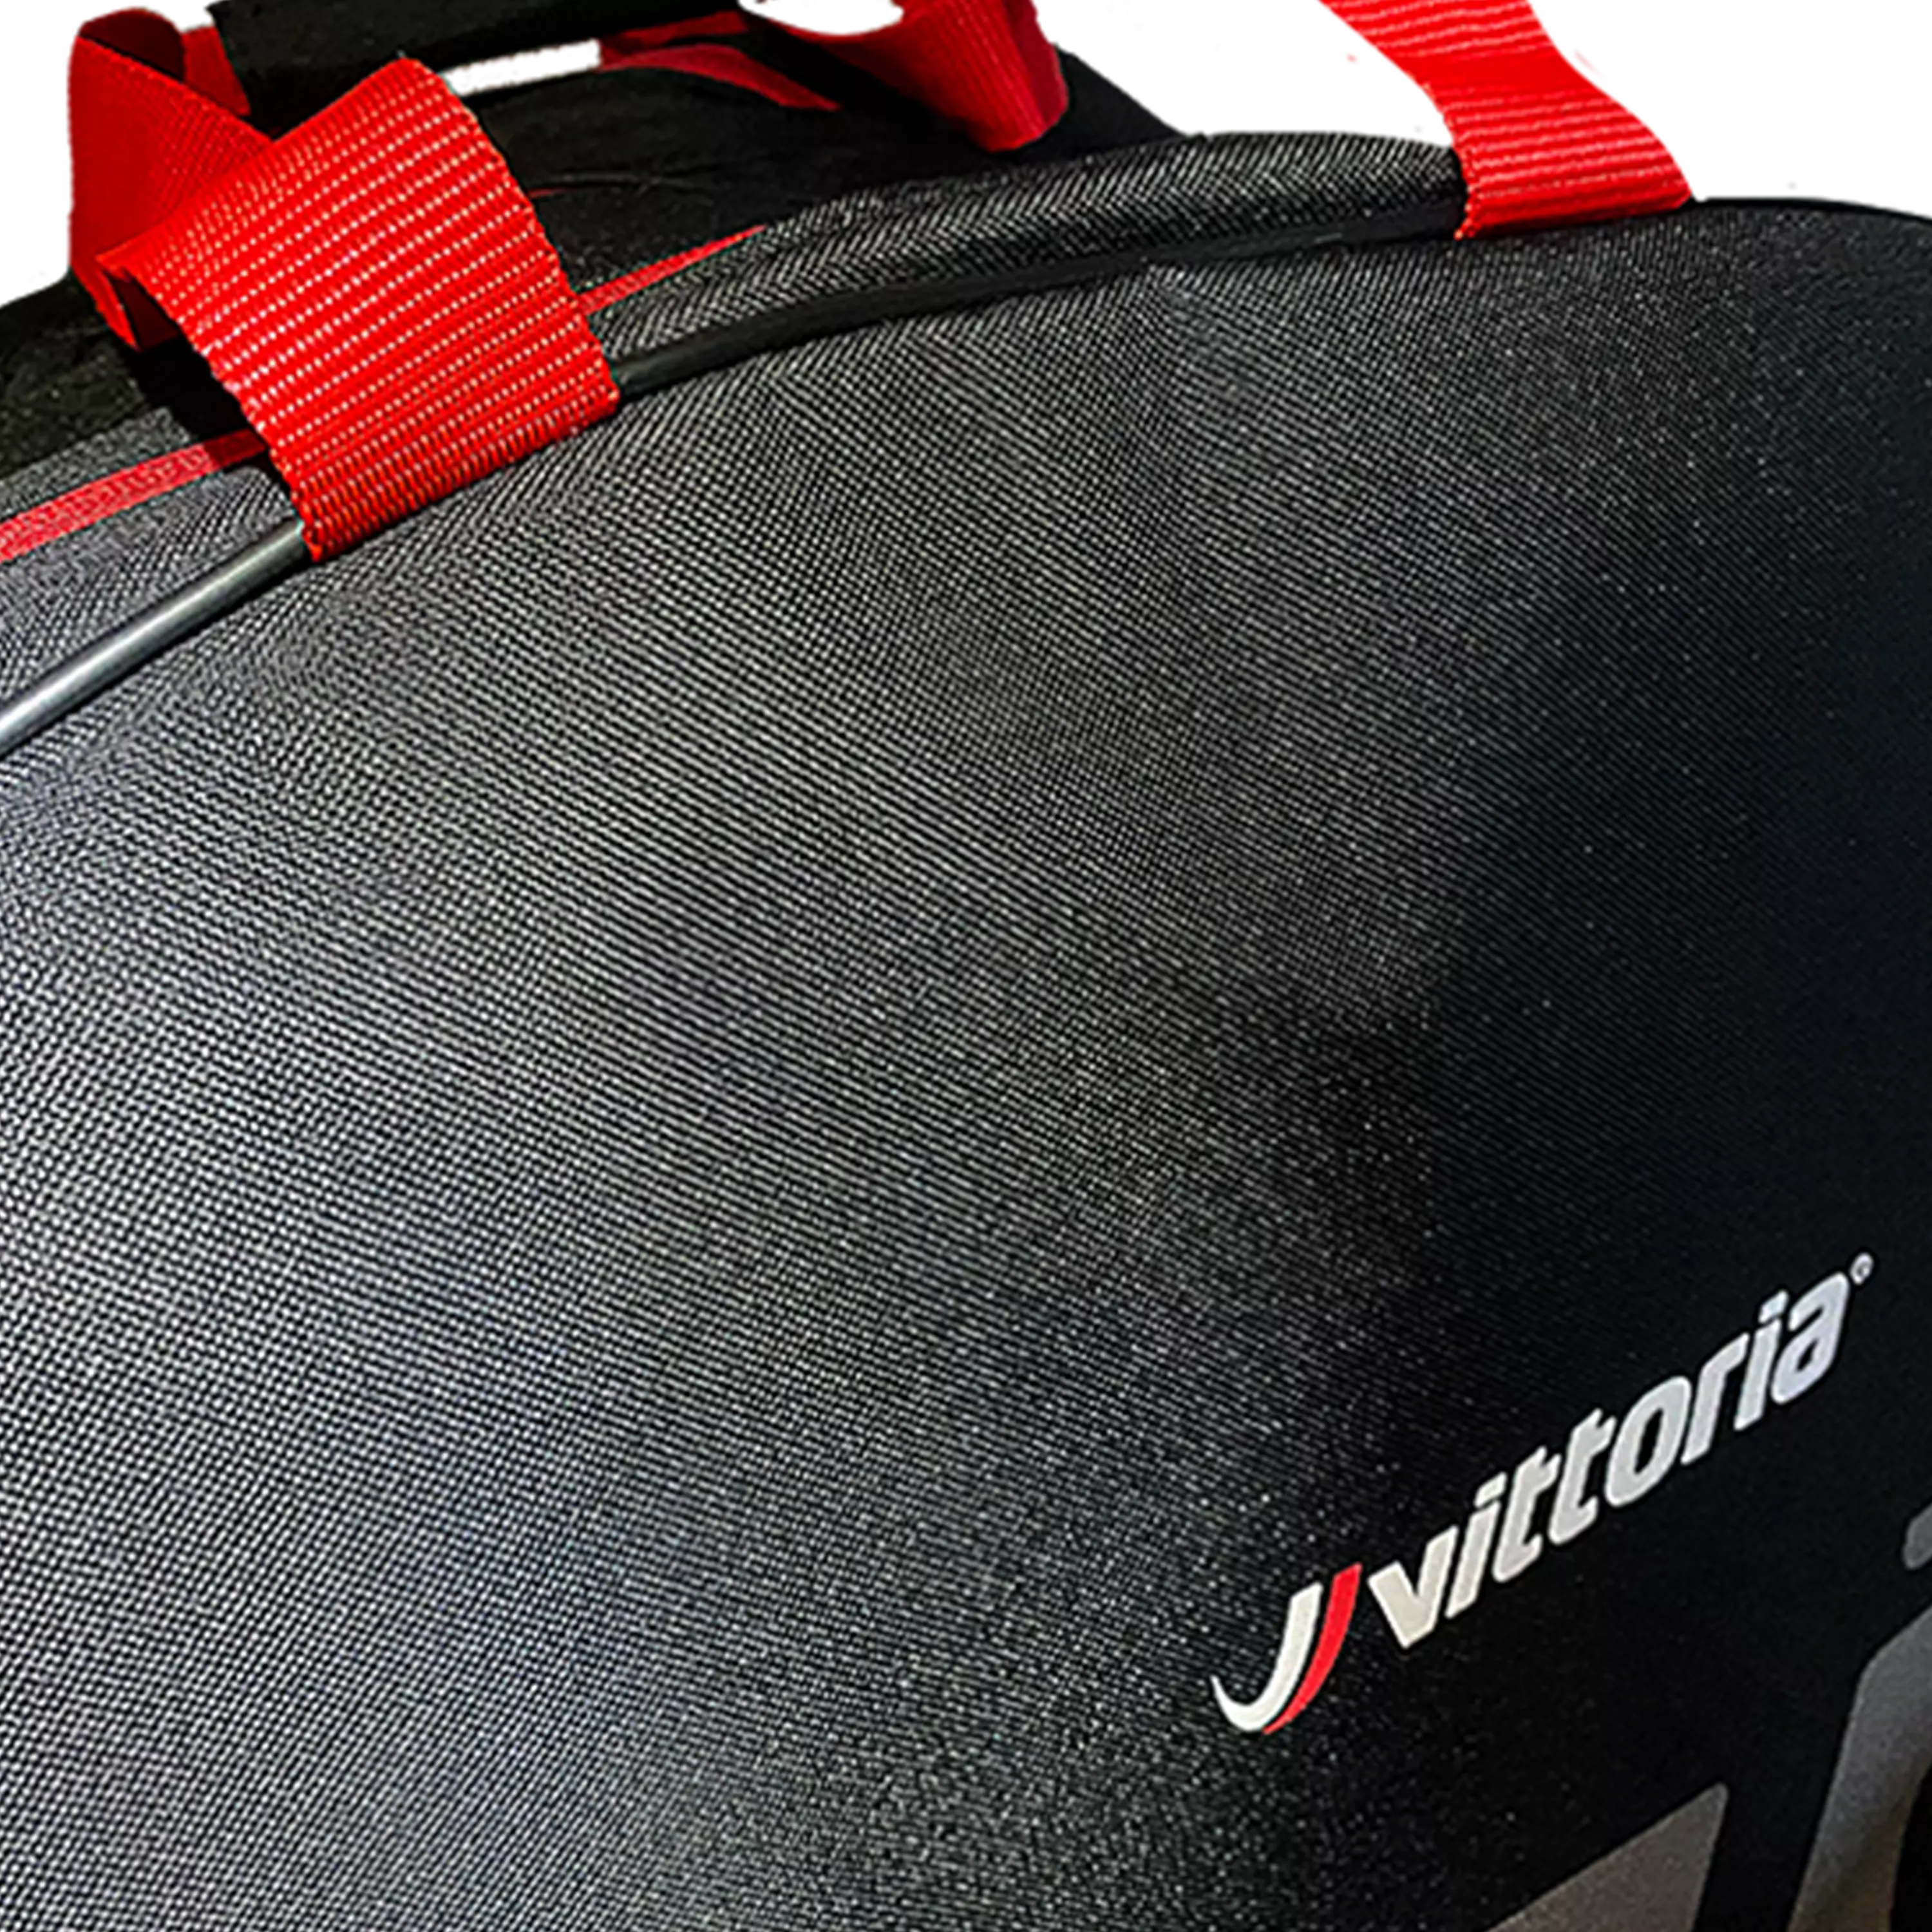 Vittoria design wheel bag | 4 wheels